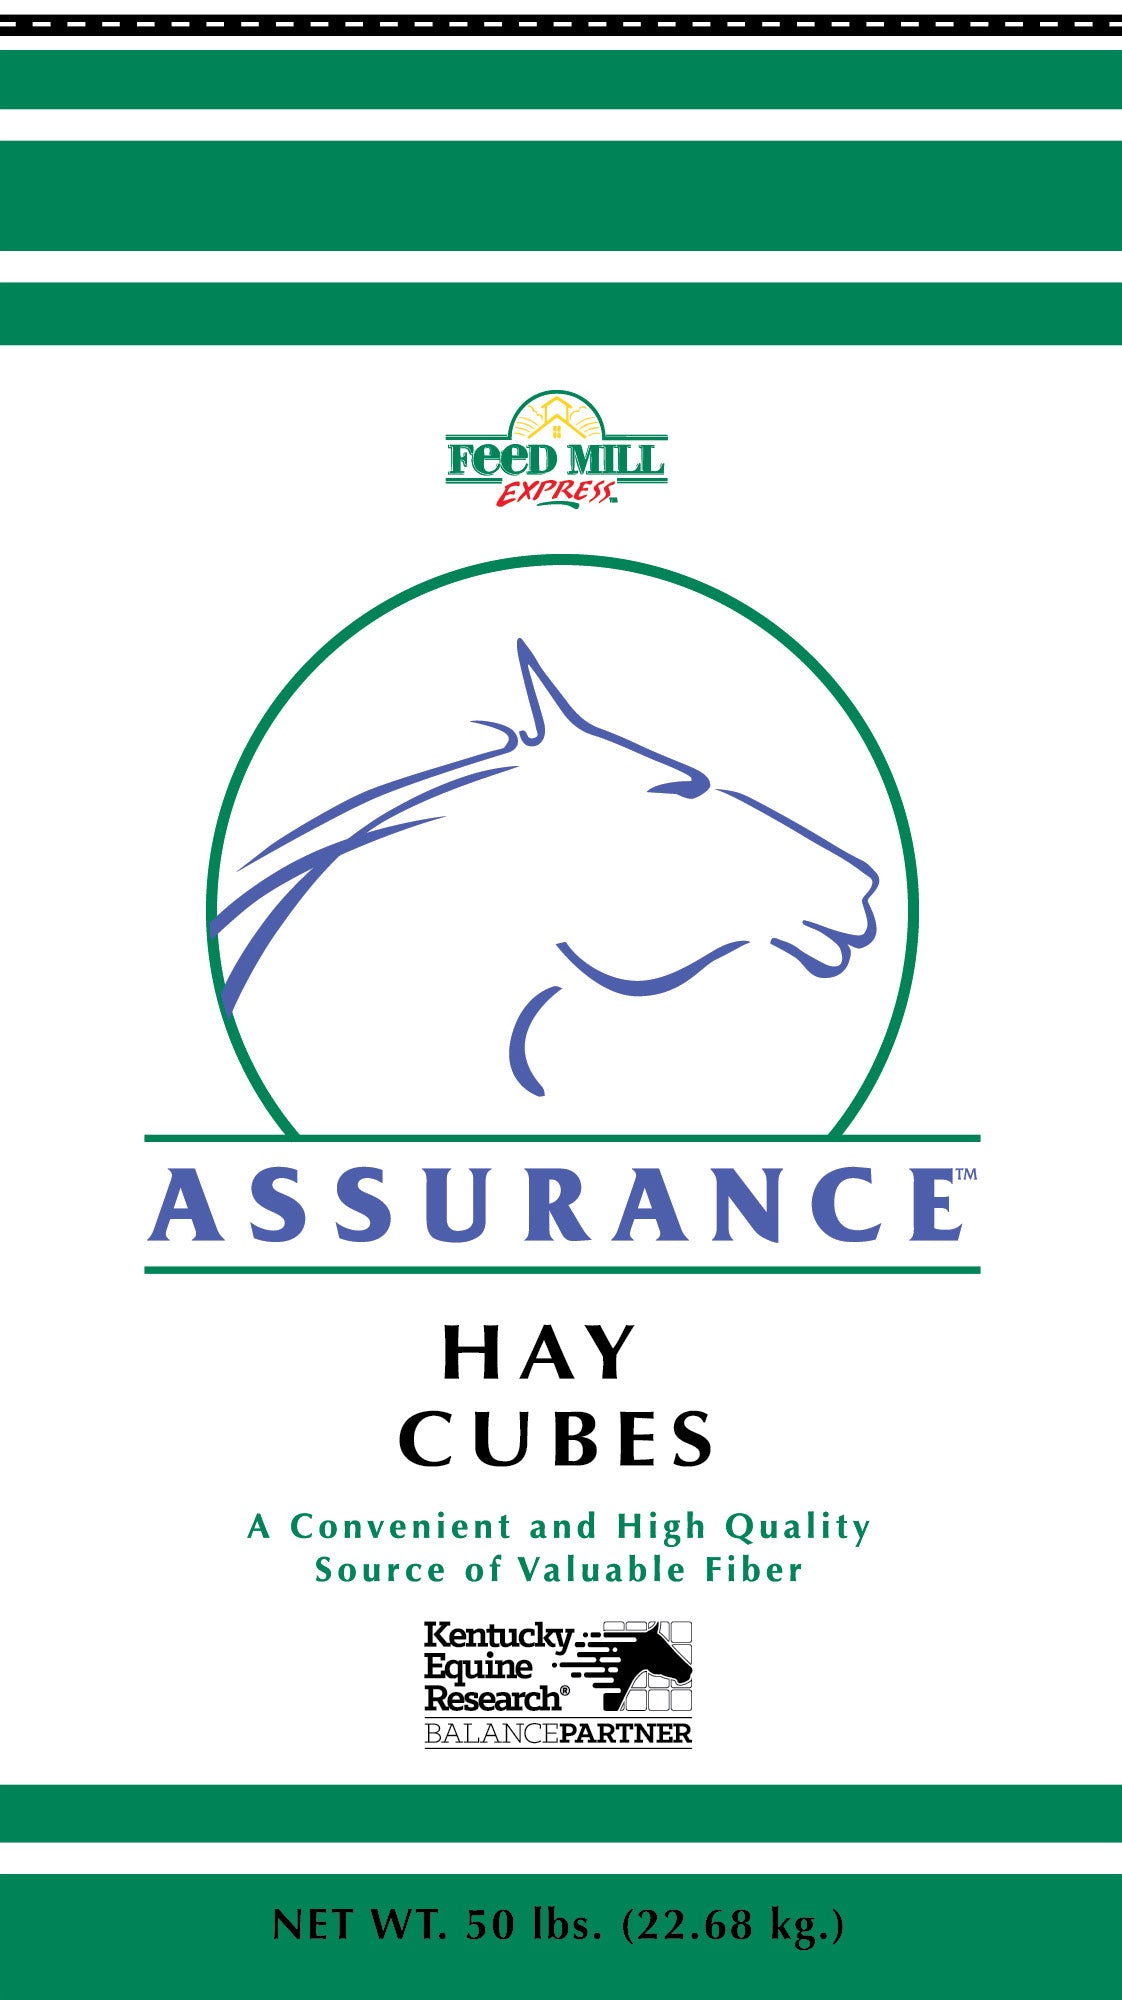 Premium Timothy Hay Cubes